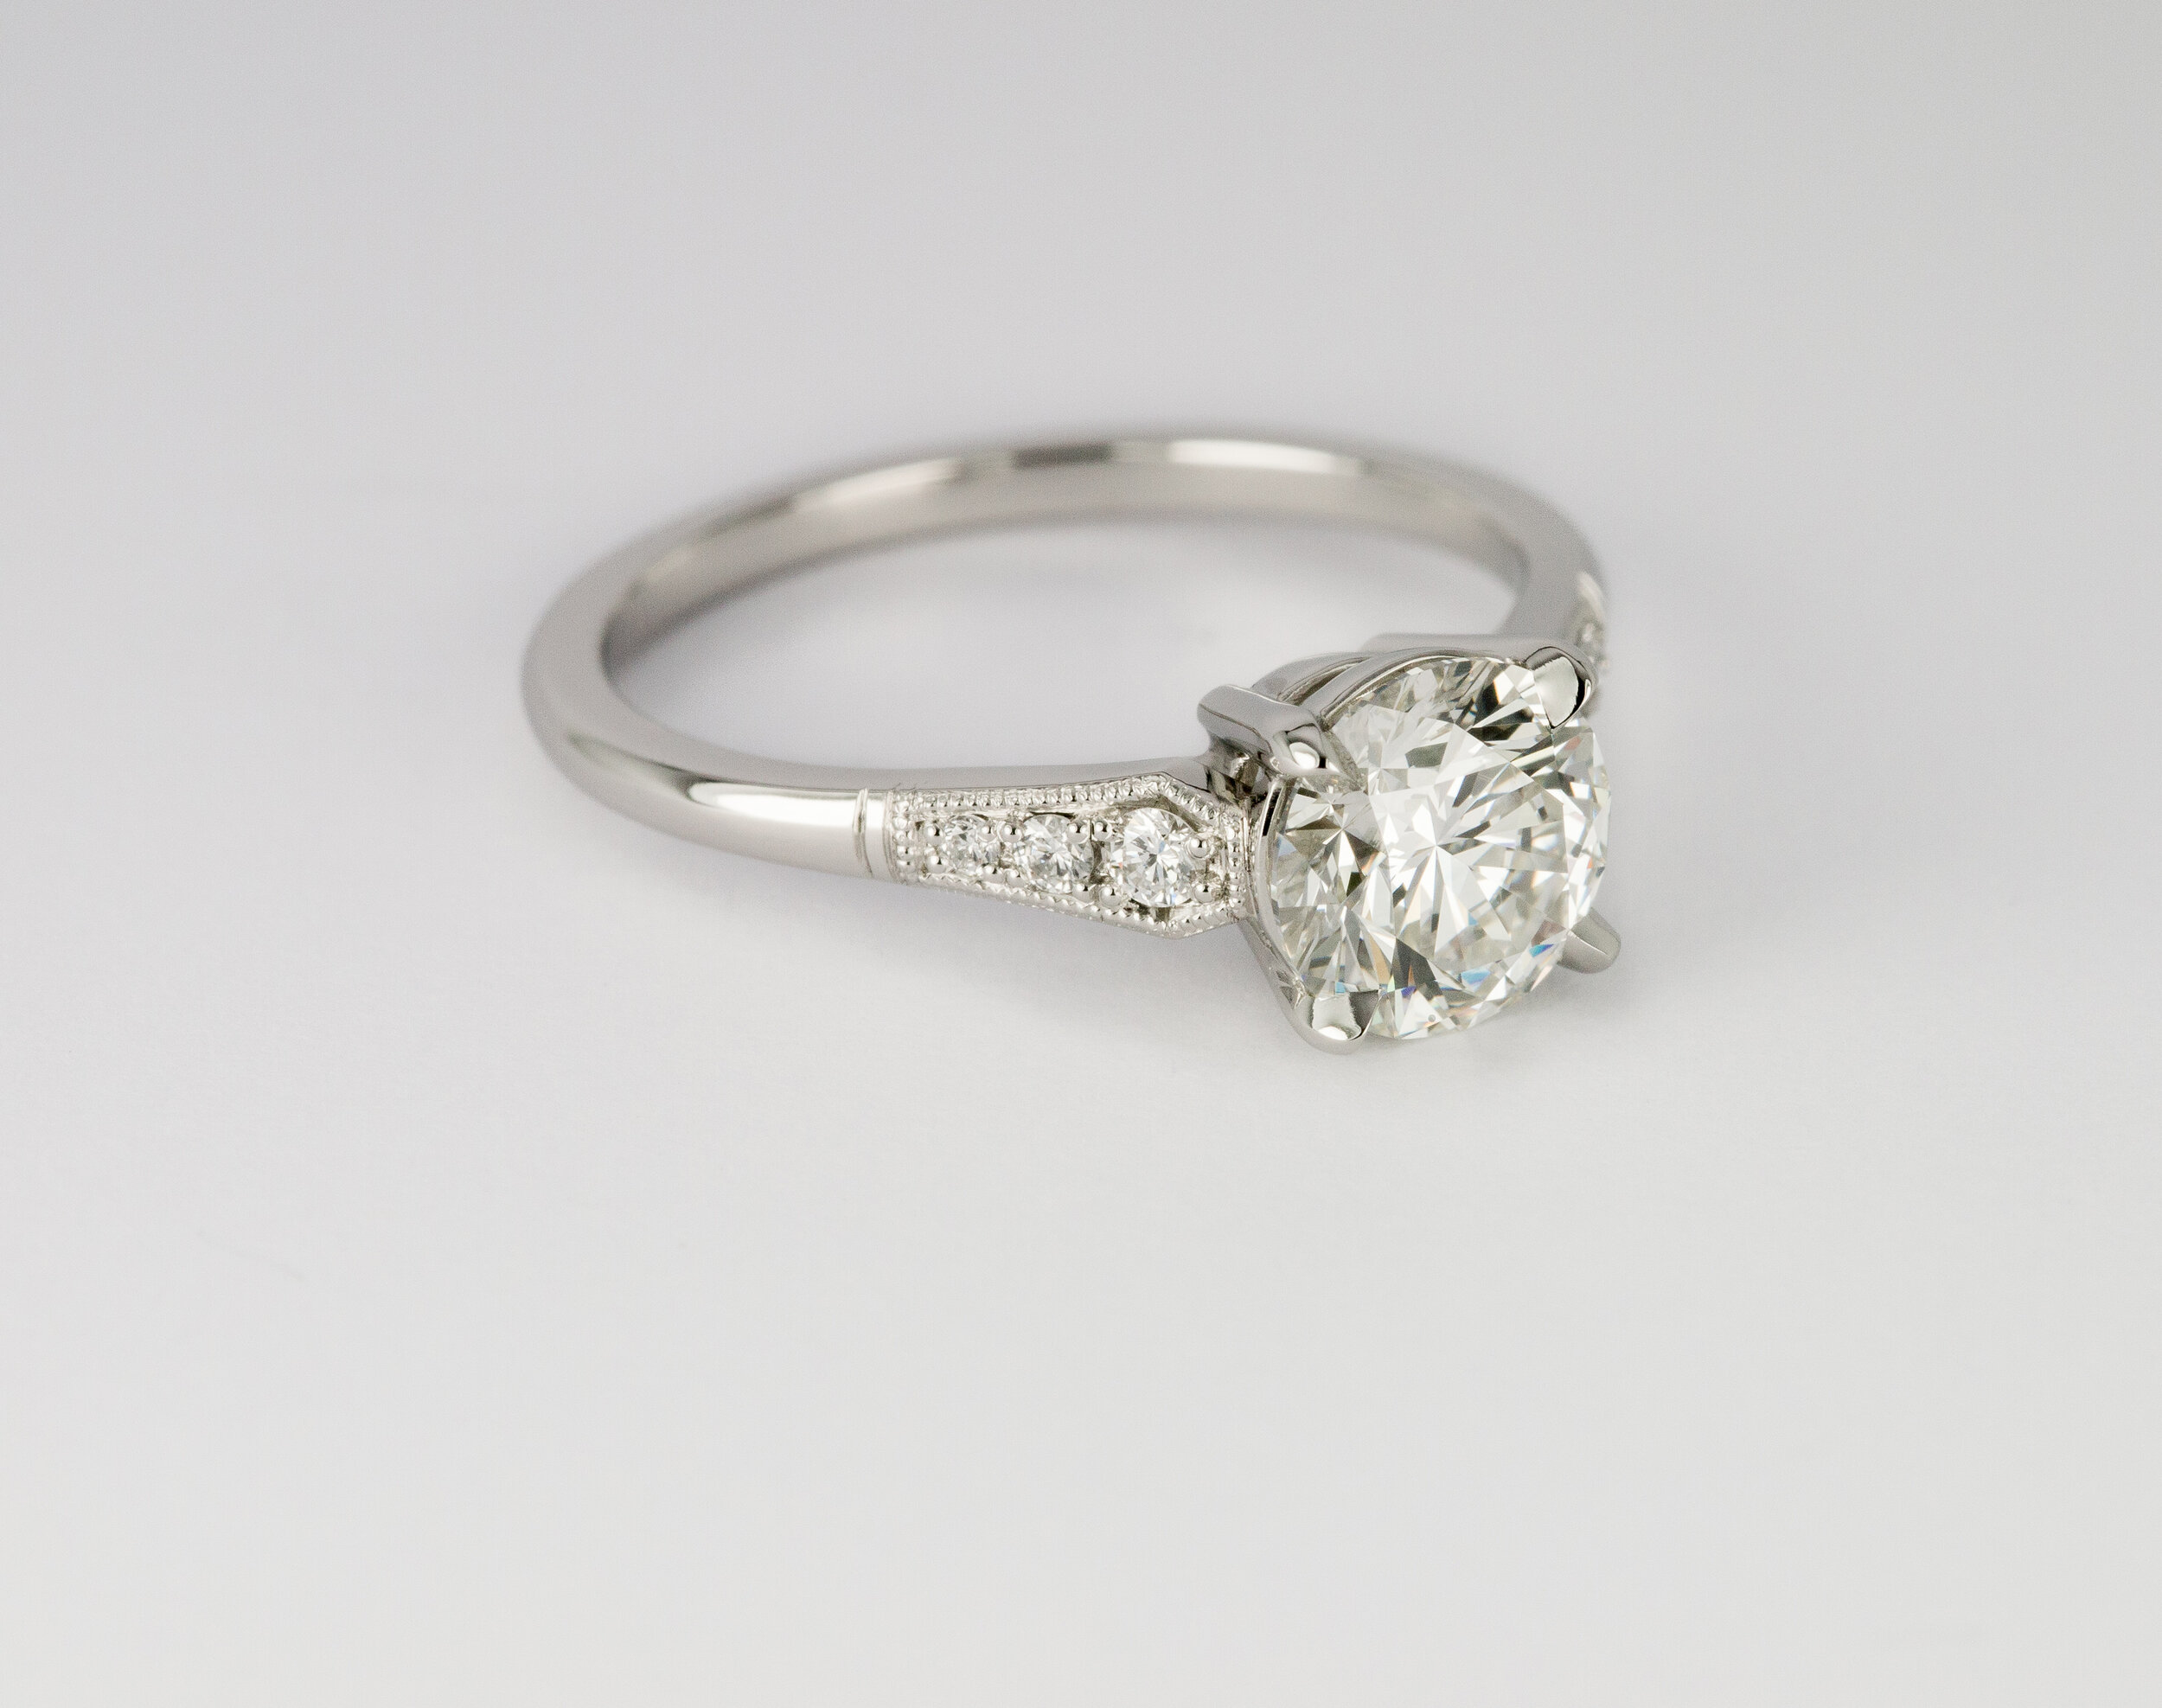  Platinum diamond engagement ring with millegrain detail  